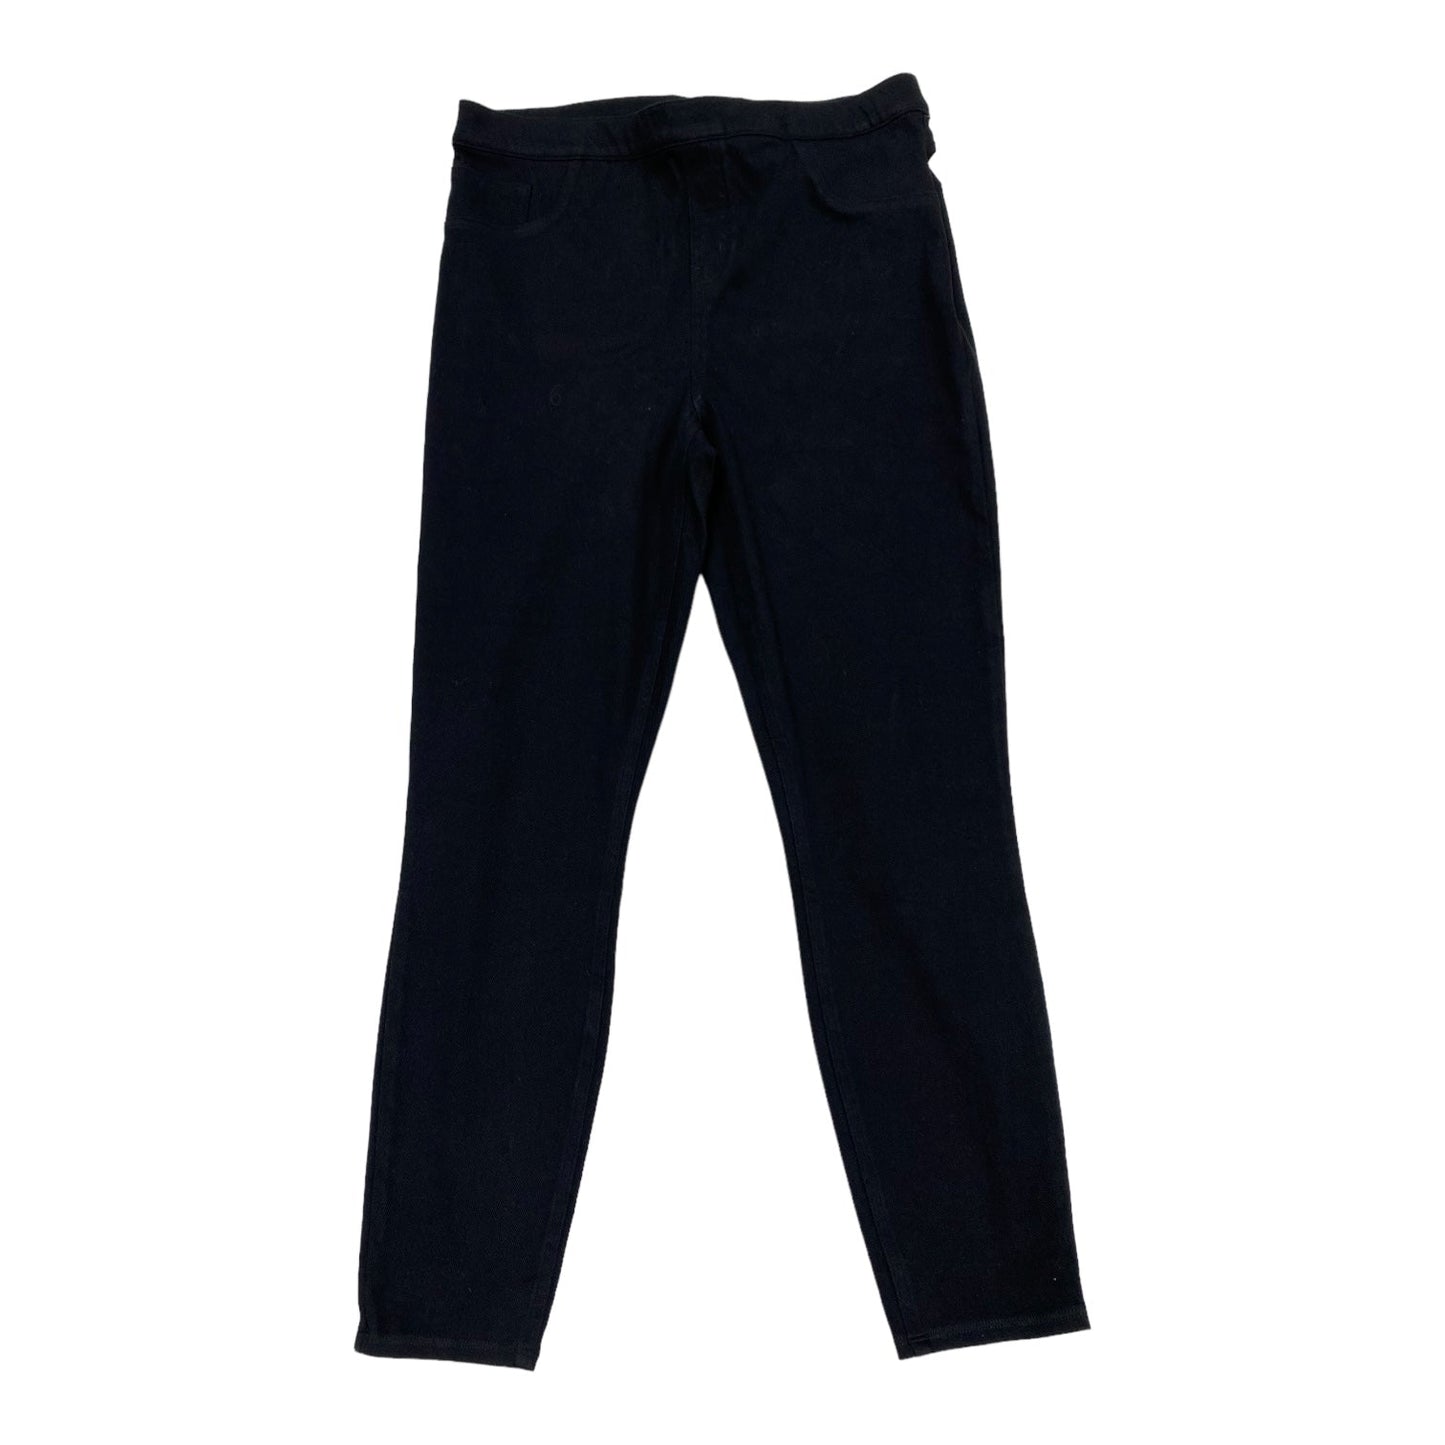 Black Jeans Jeggings Spanx, Size 1x